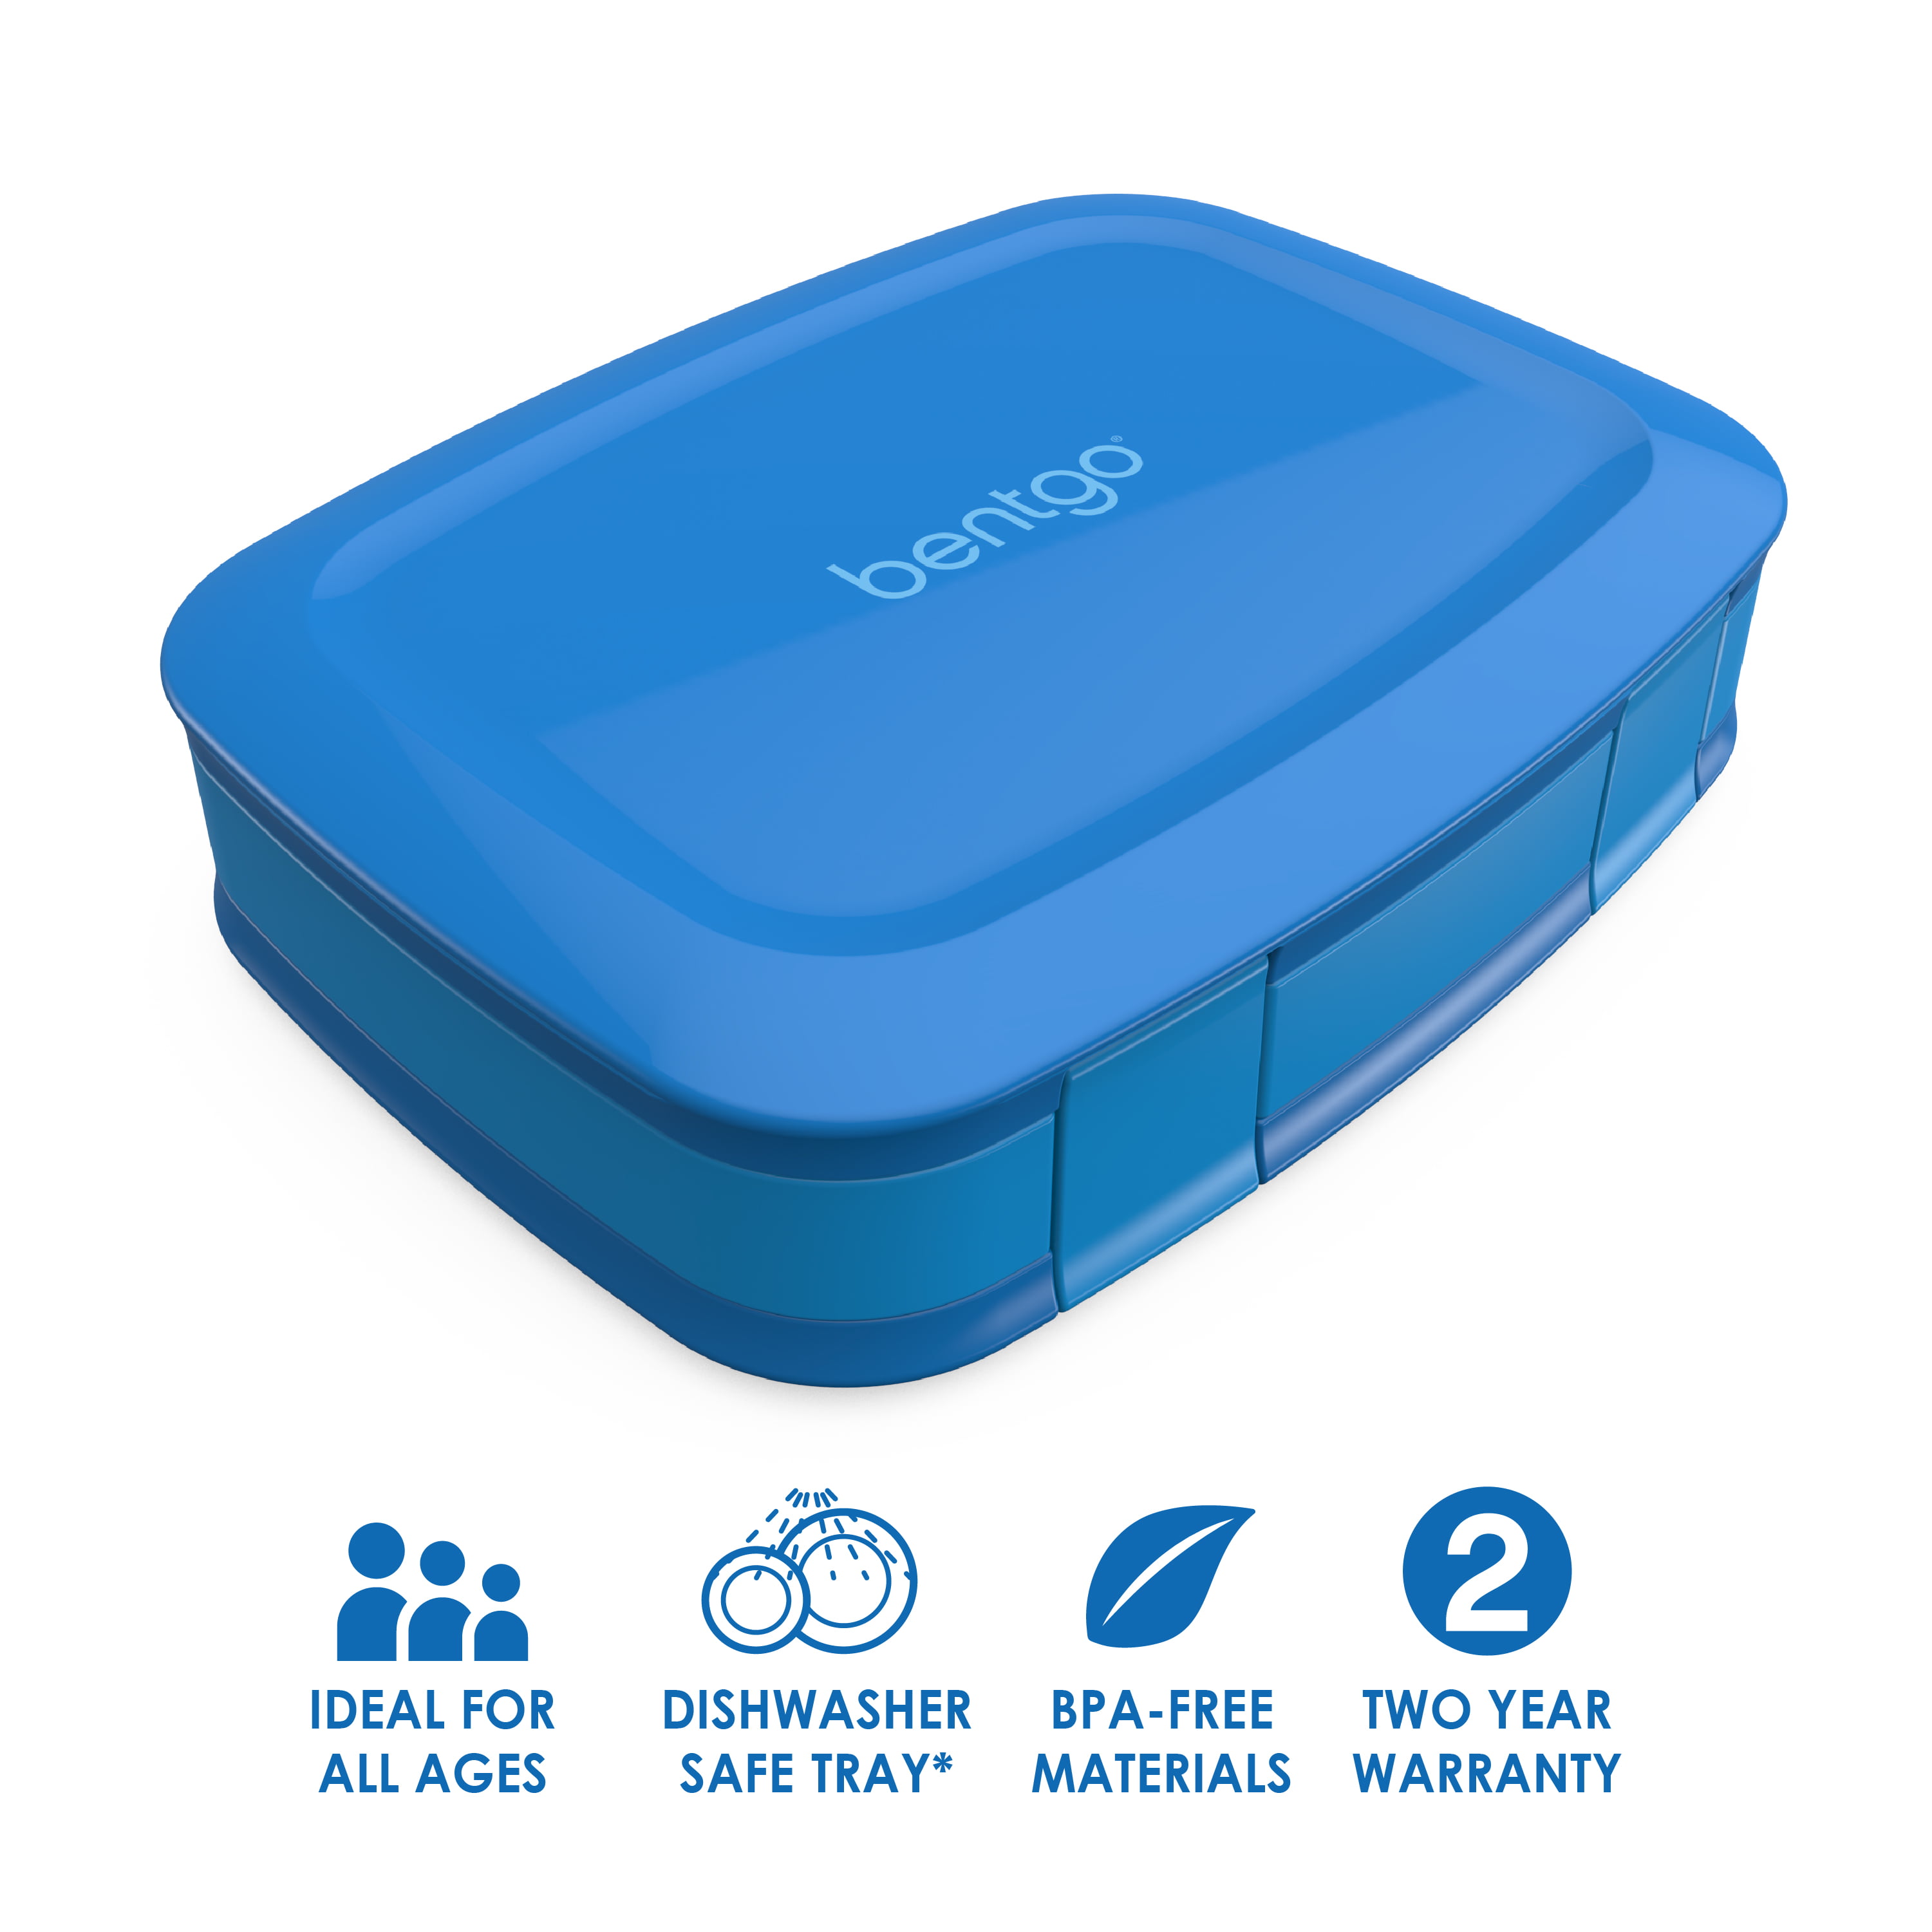 Bentgo 41oz Glass Leak-proof Lunch Box with Plastic Lid - Blue